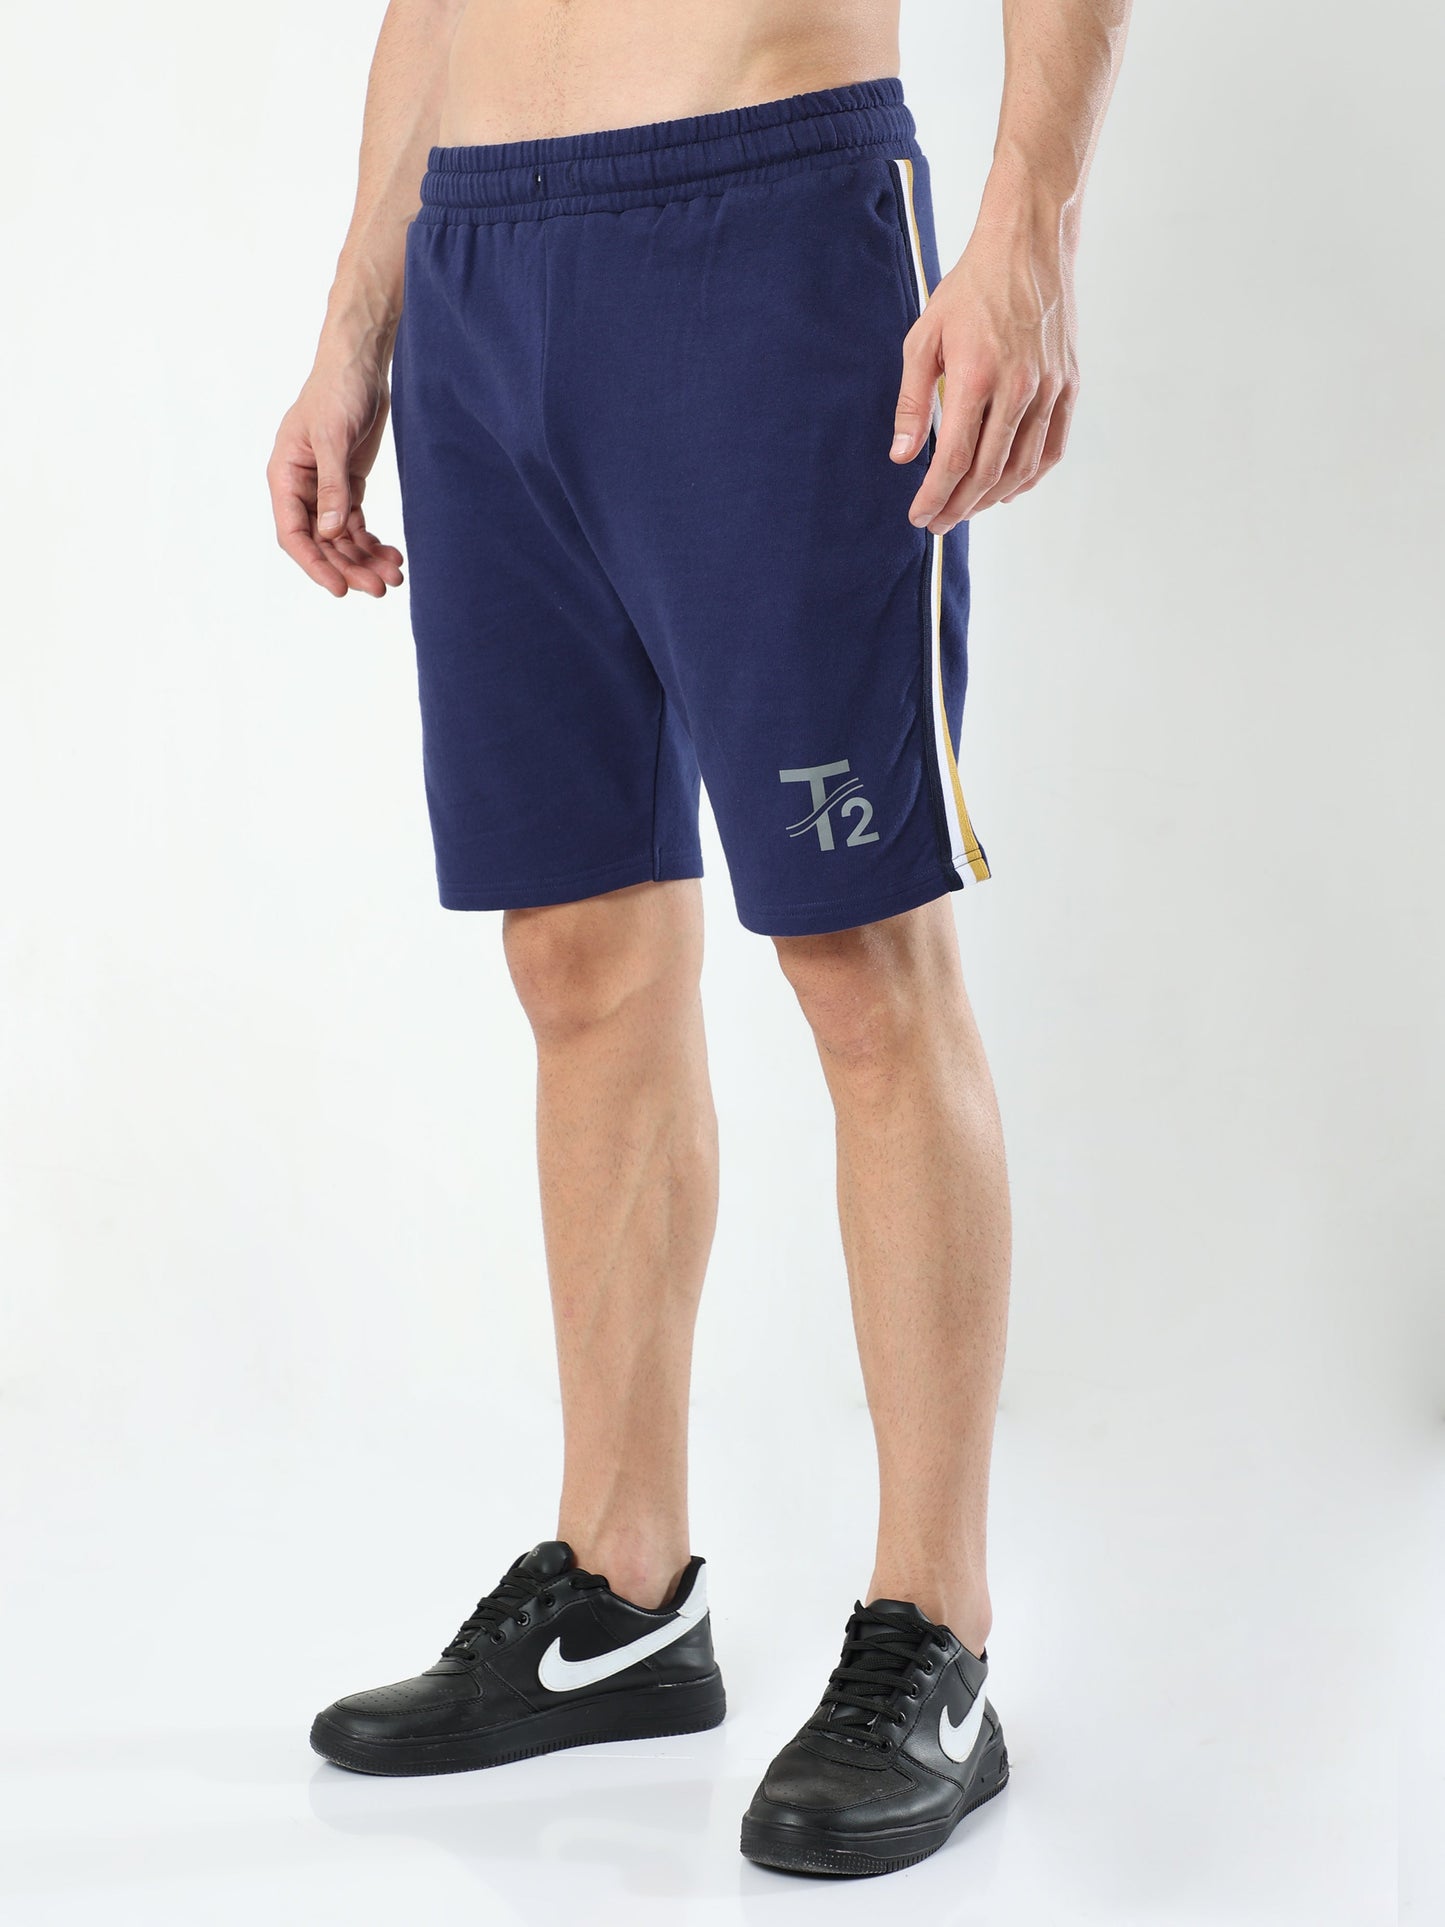 Comfy Cotton - Men's Casual Shorts : Navy